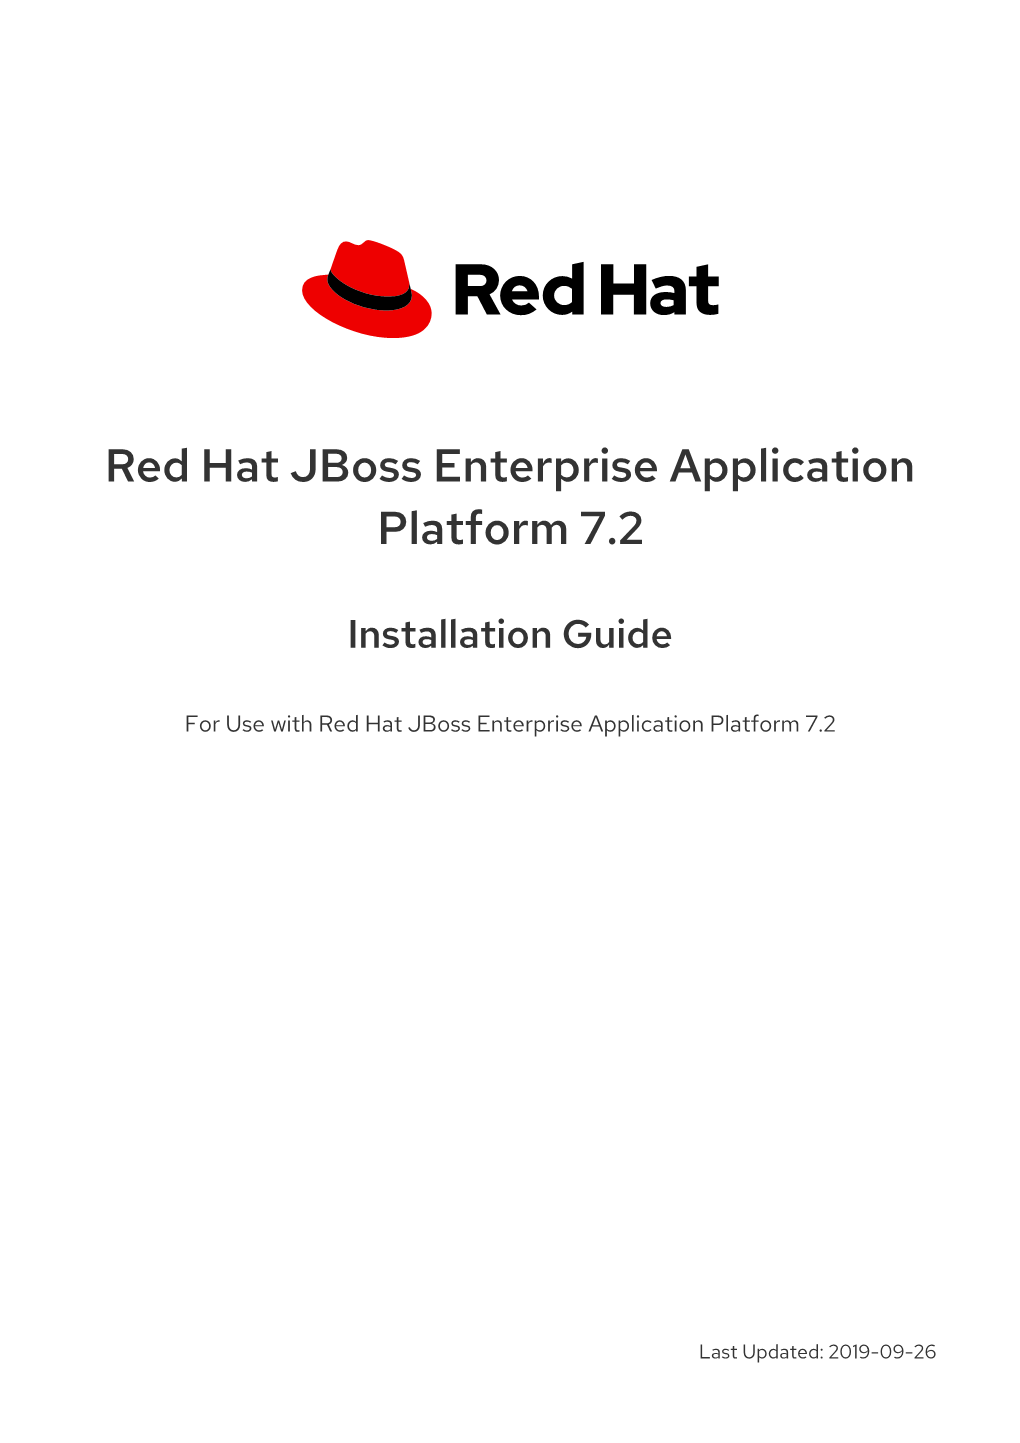 Red Hat Jboss Enterprise Application Platform 7.2 Installation Guide